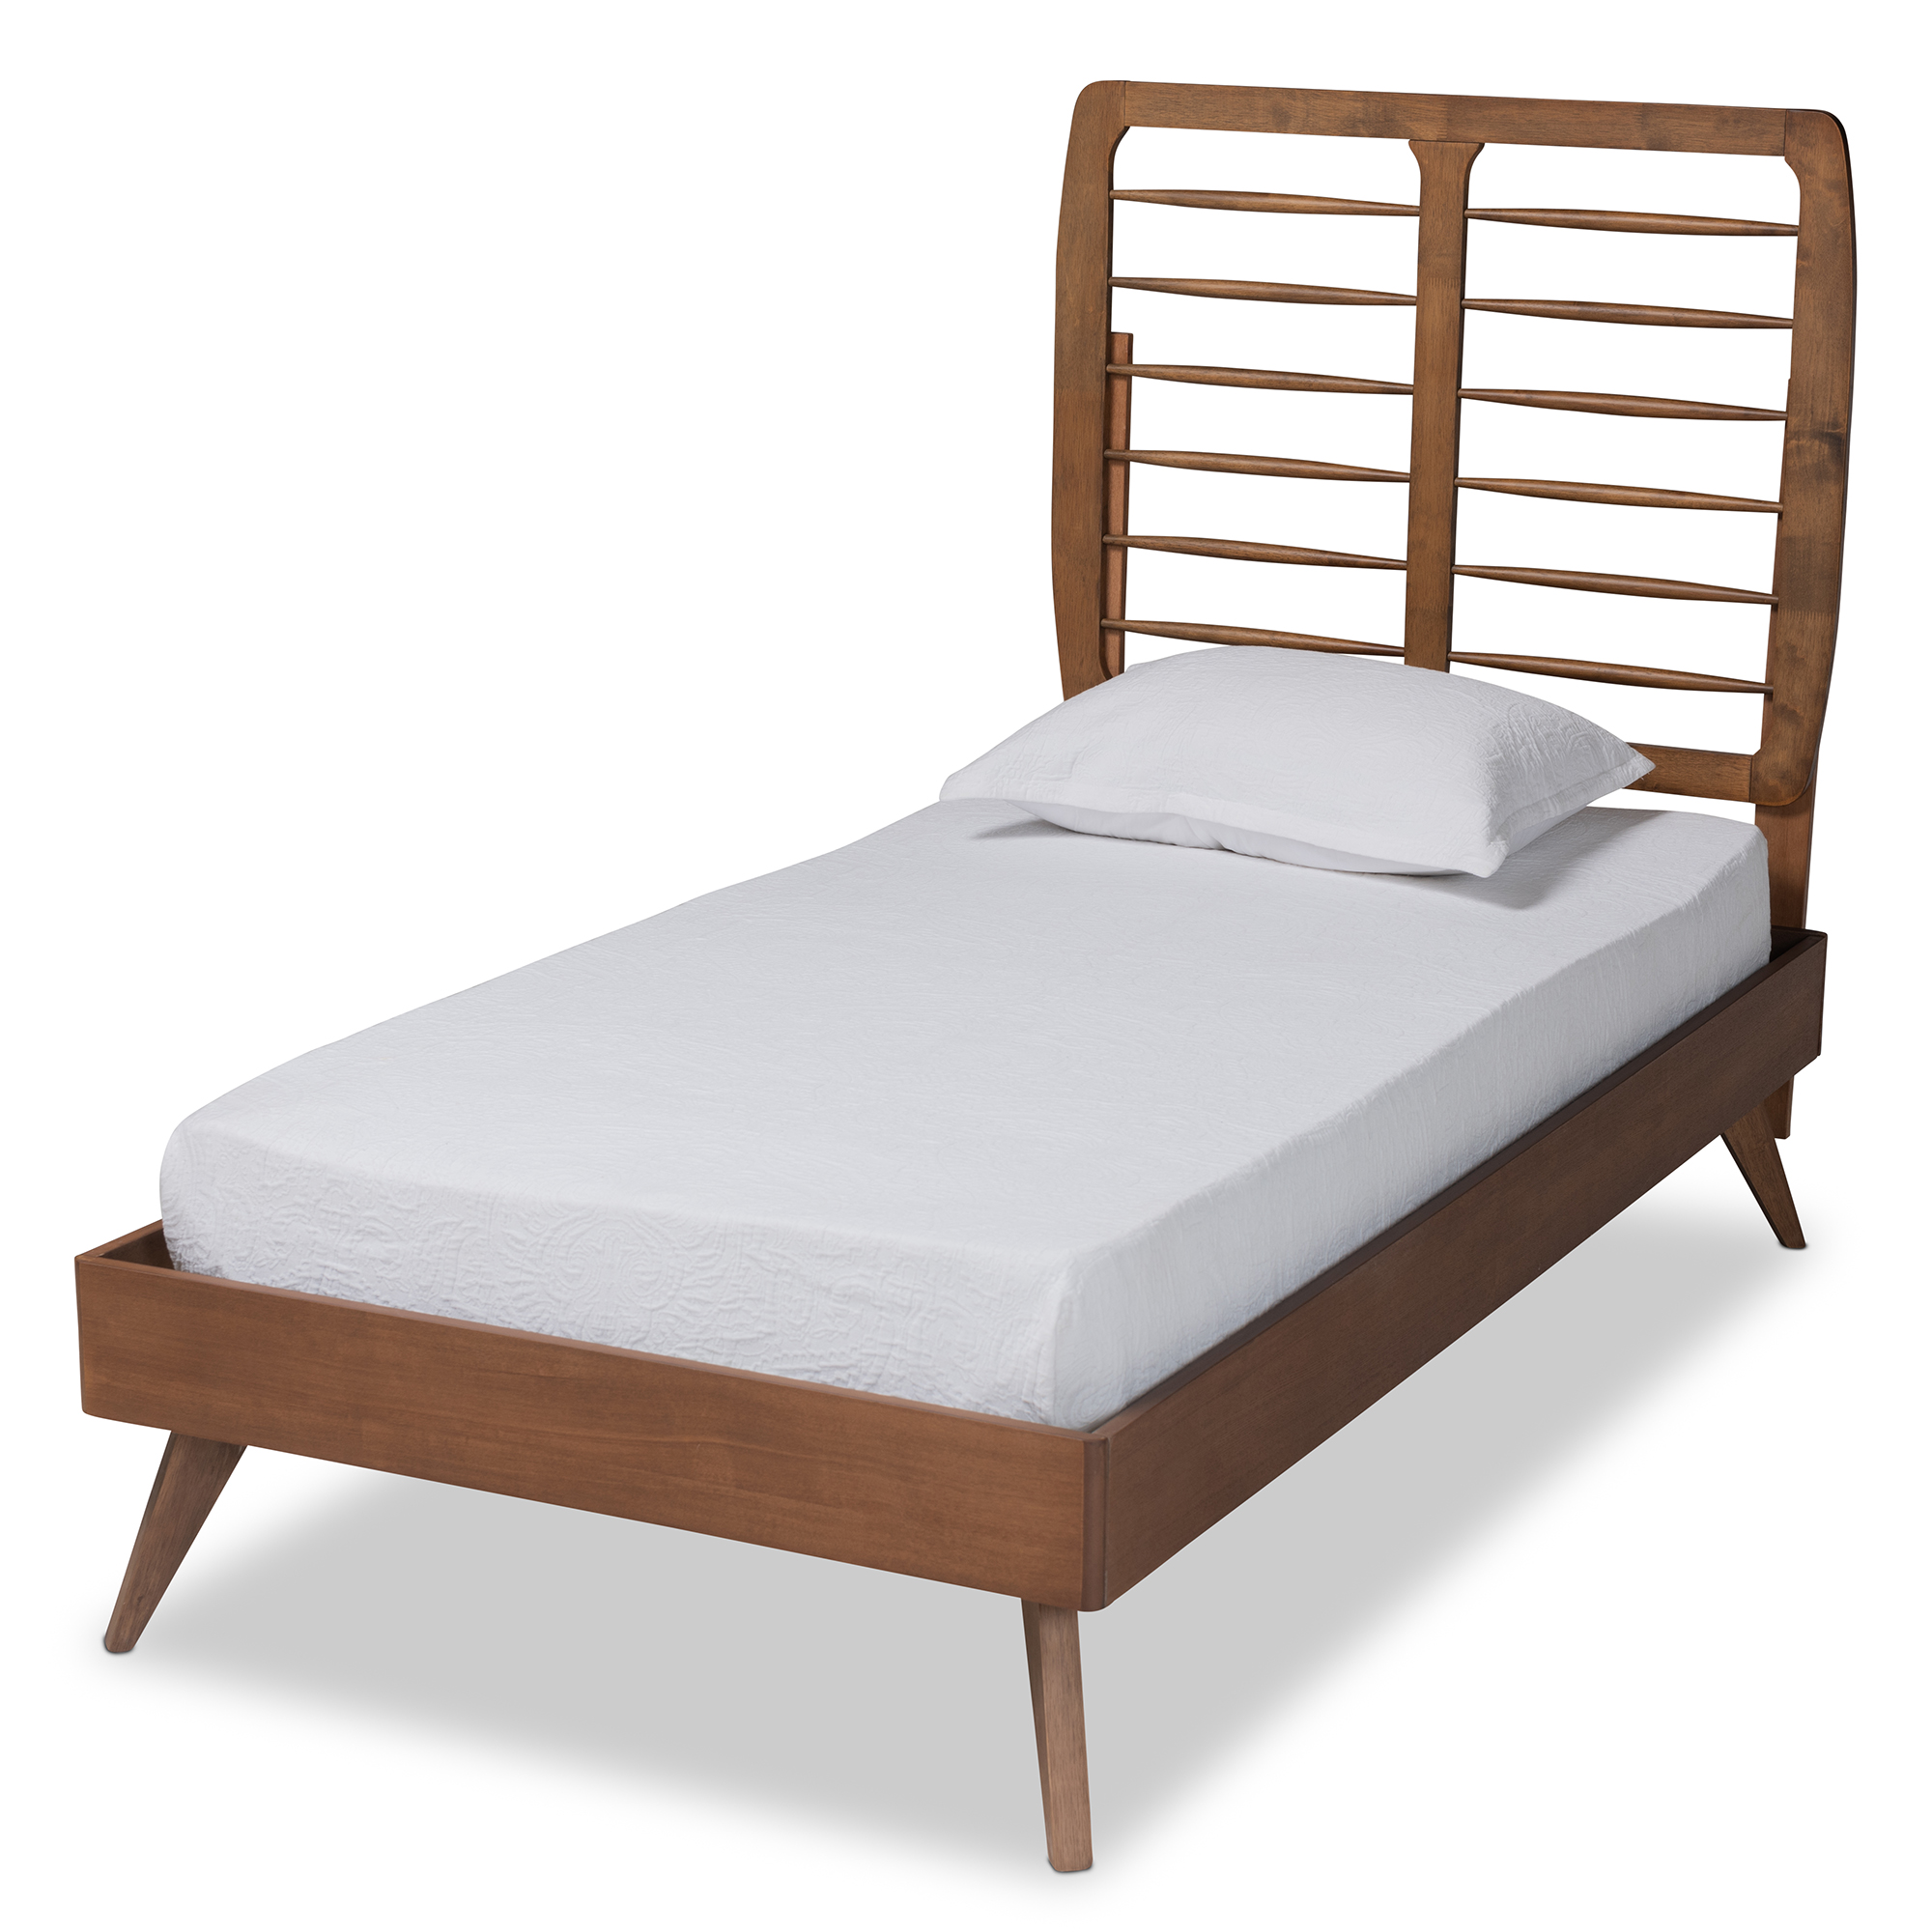 Baxton Studio Yana Mid-Century Modern Walnut Brown Finished Wood Twin Size Platform Bed